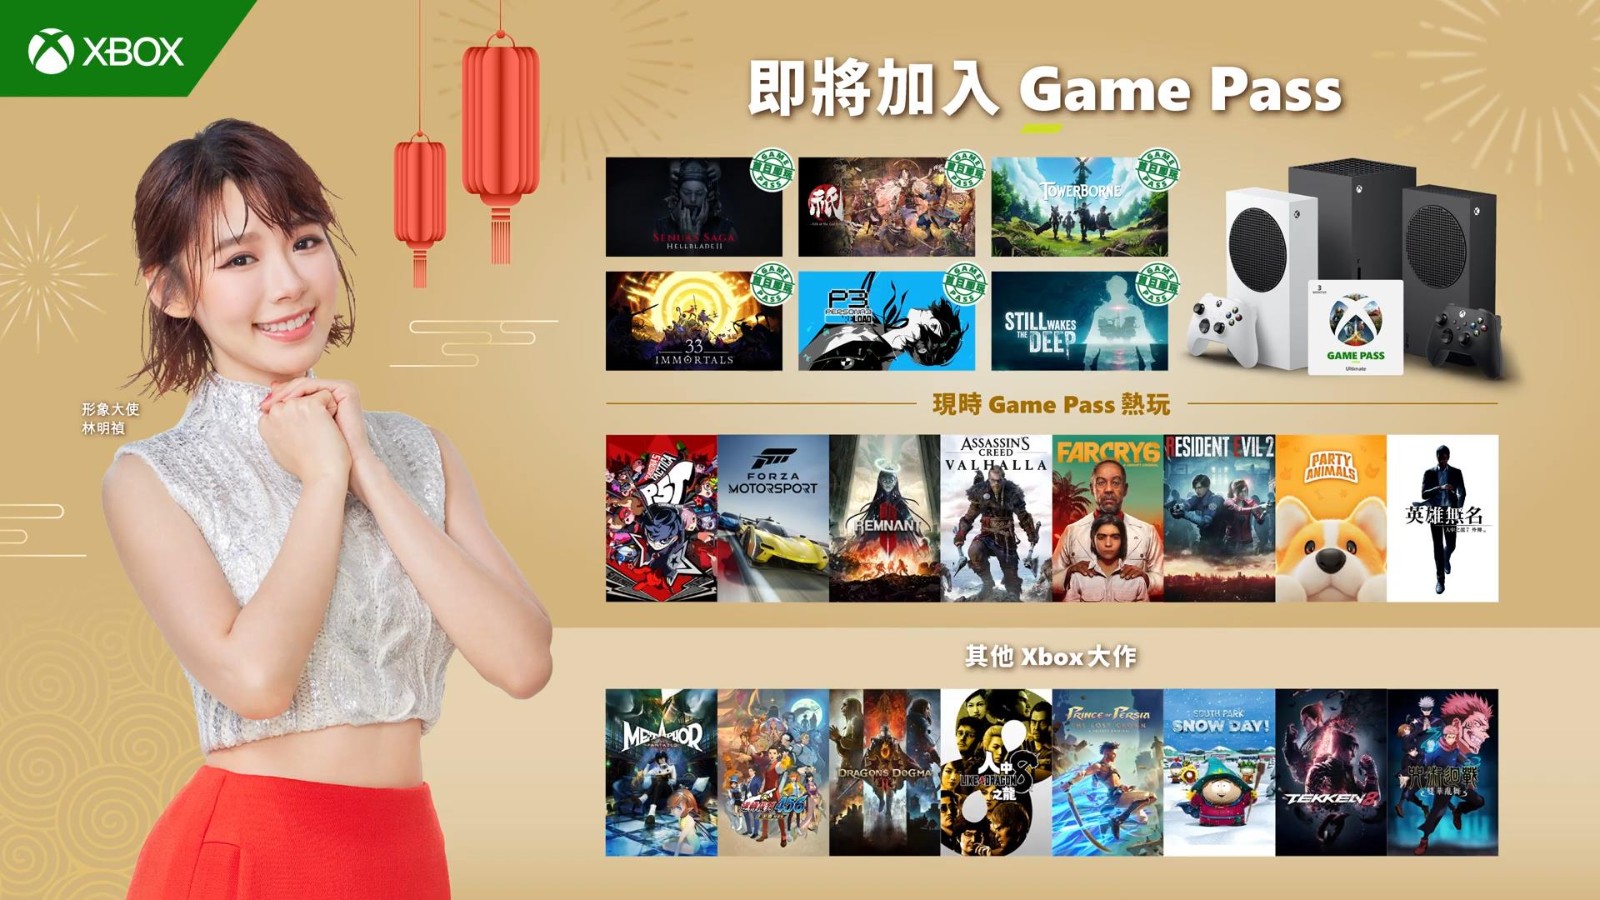 Xbox港版春节宣传片 马来西亚女星林明祯出演